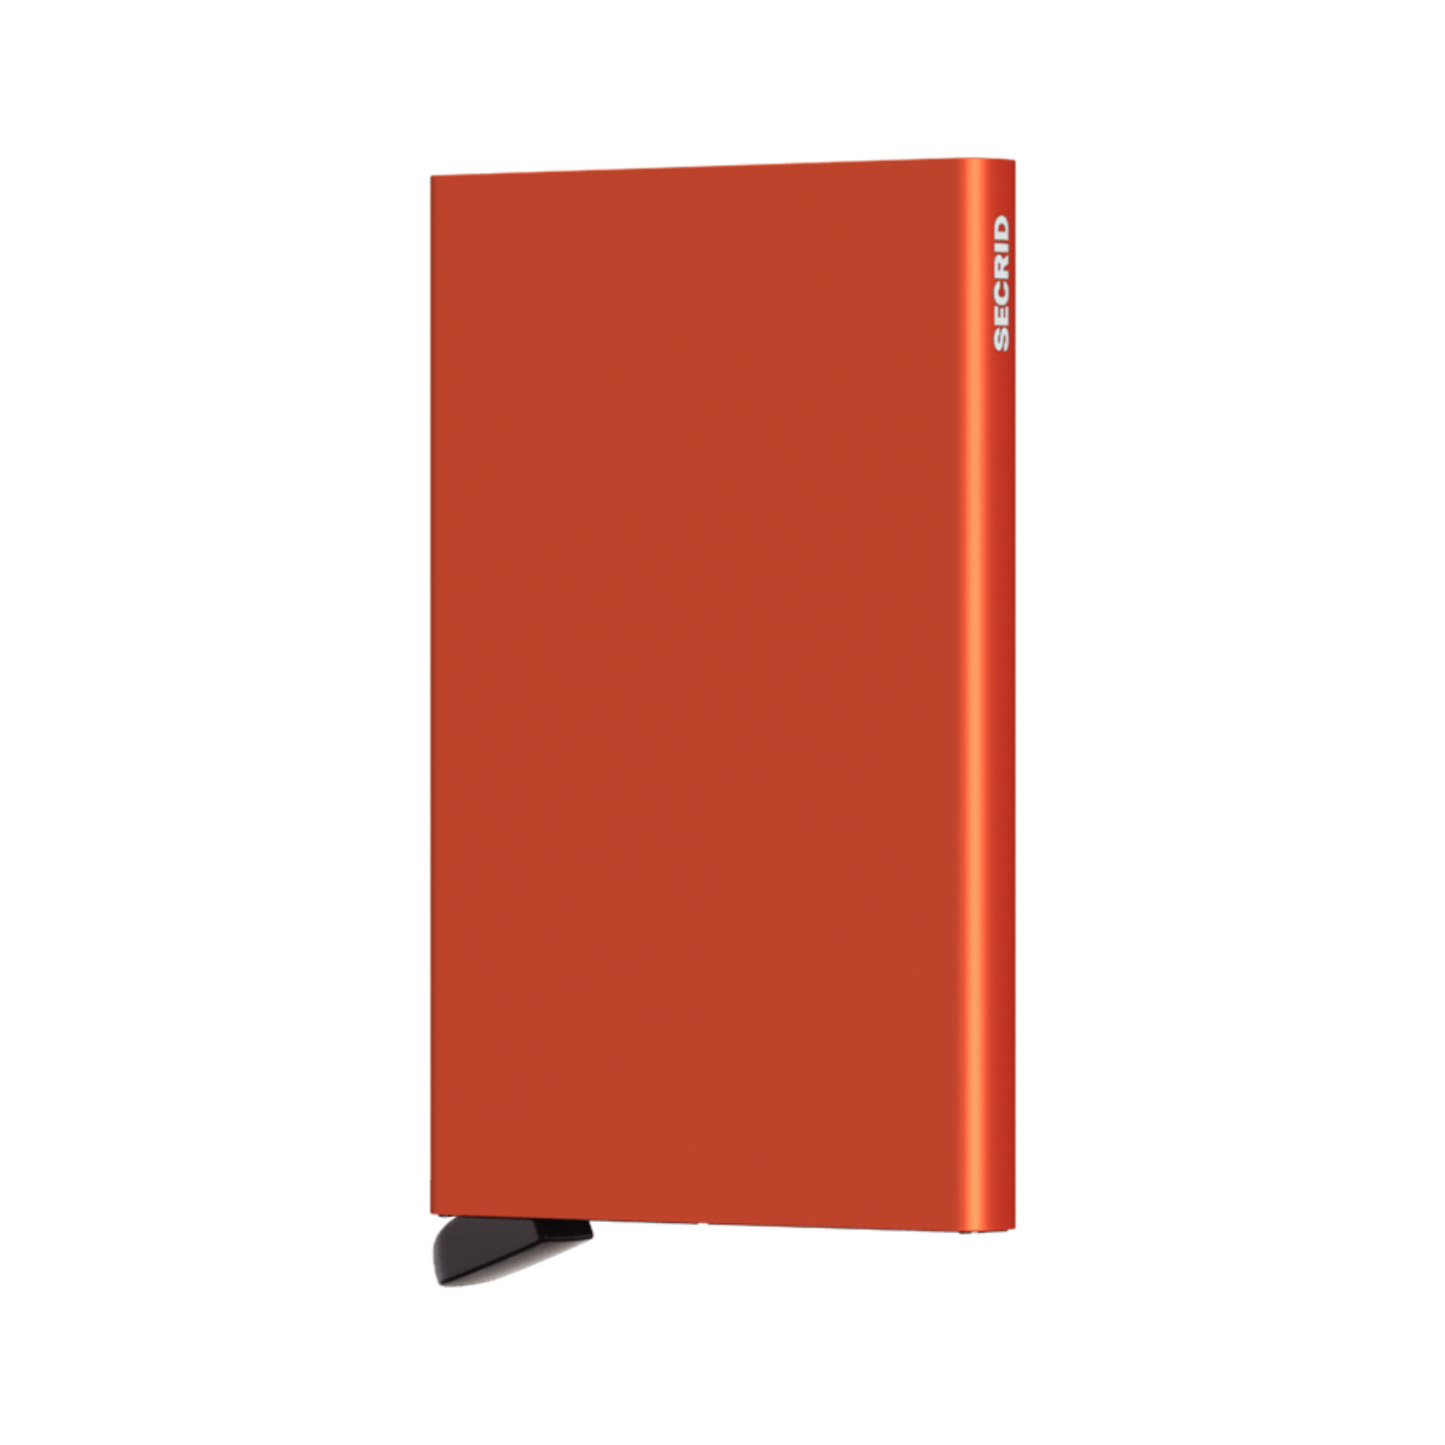 Metallic orange rectangular wallet with black bottom tab and small white logo on side.